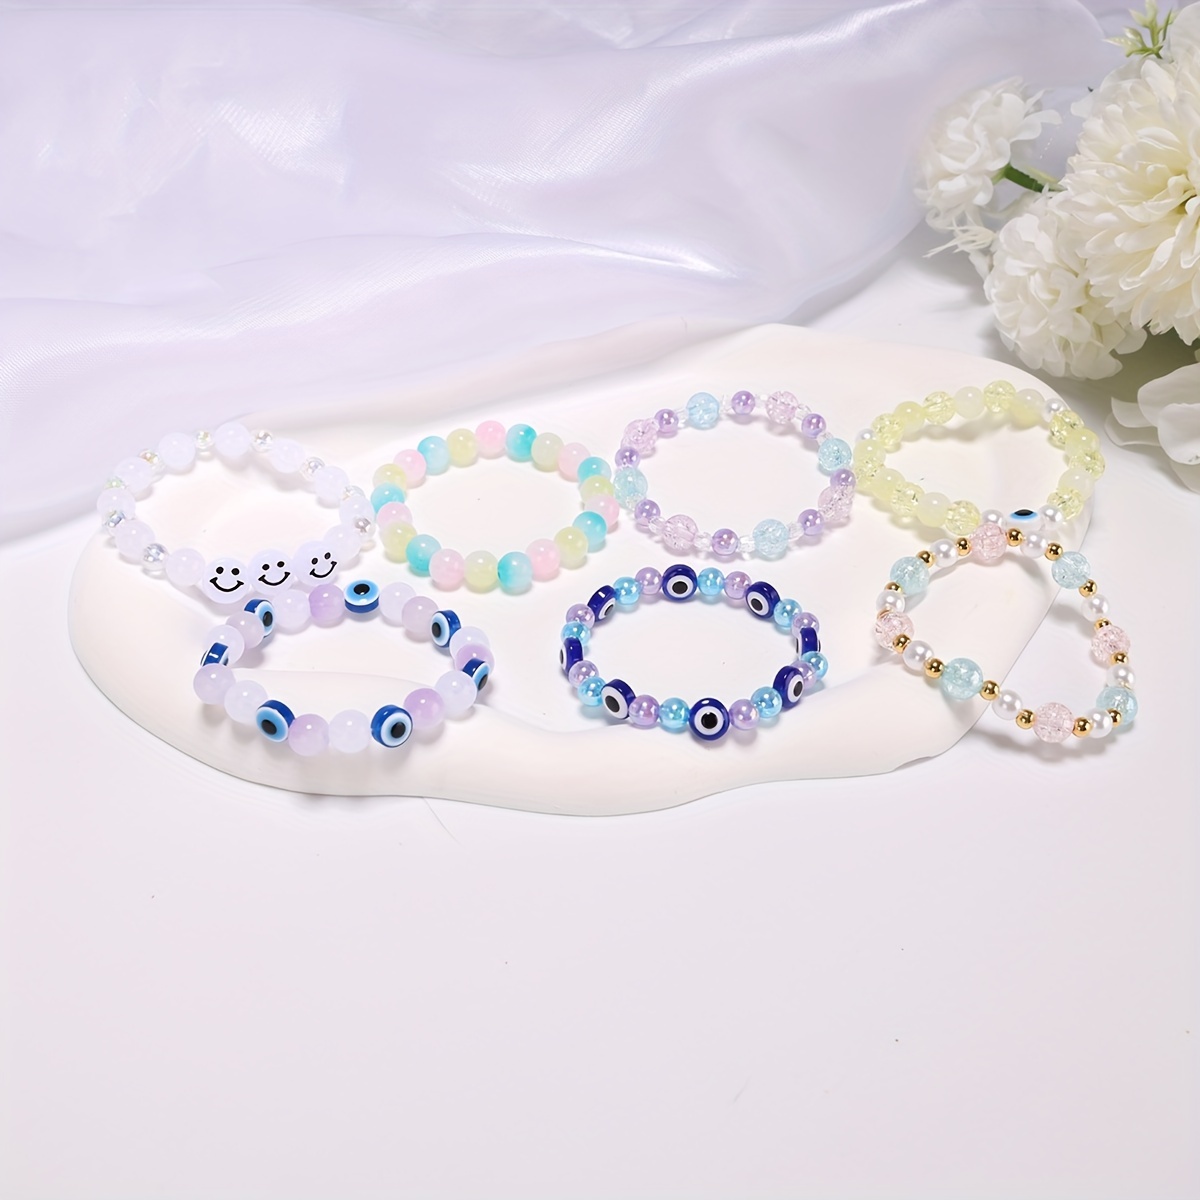 New Transparent Color Glass Beads Bracelet Making Kit, Girls' Lovely Cute Bracelet  Necklace Jewelry Making Kit